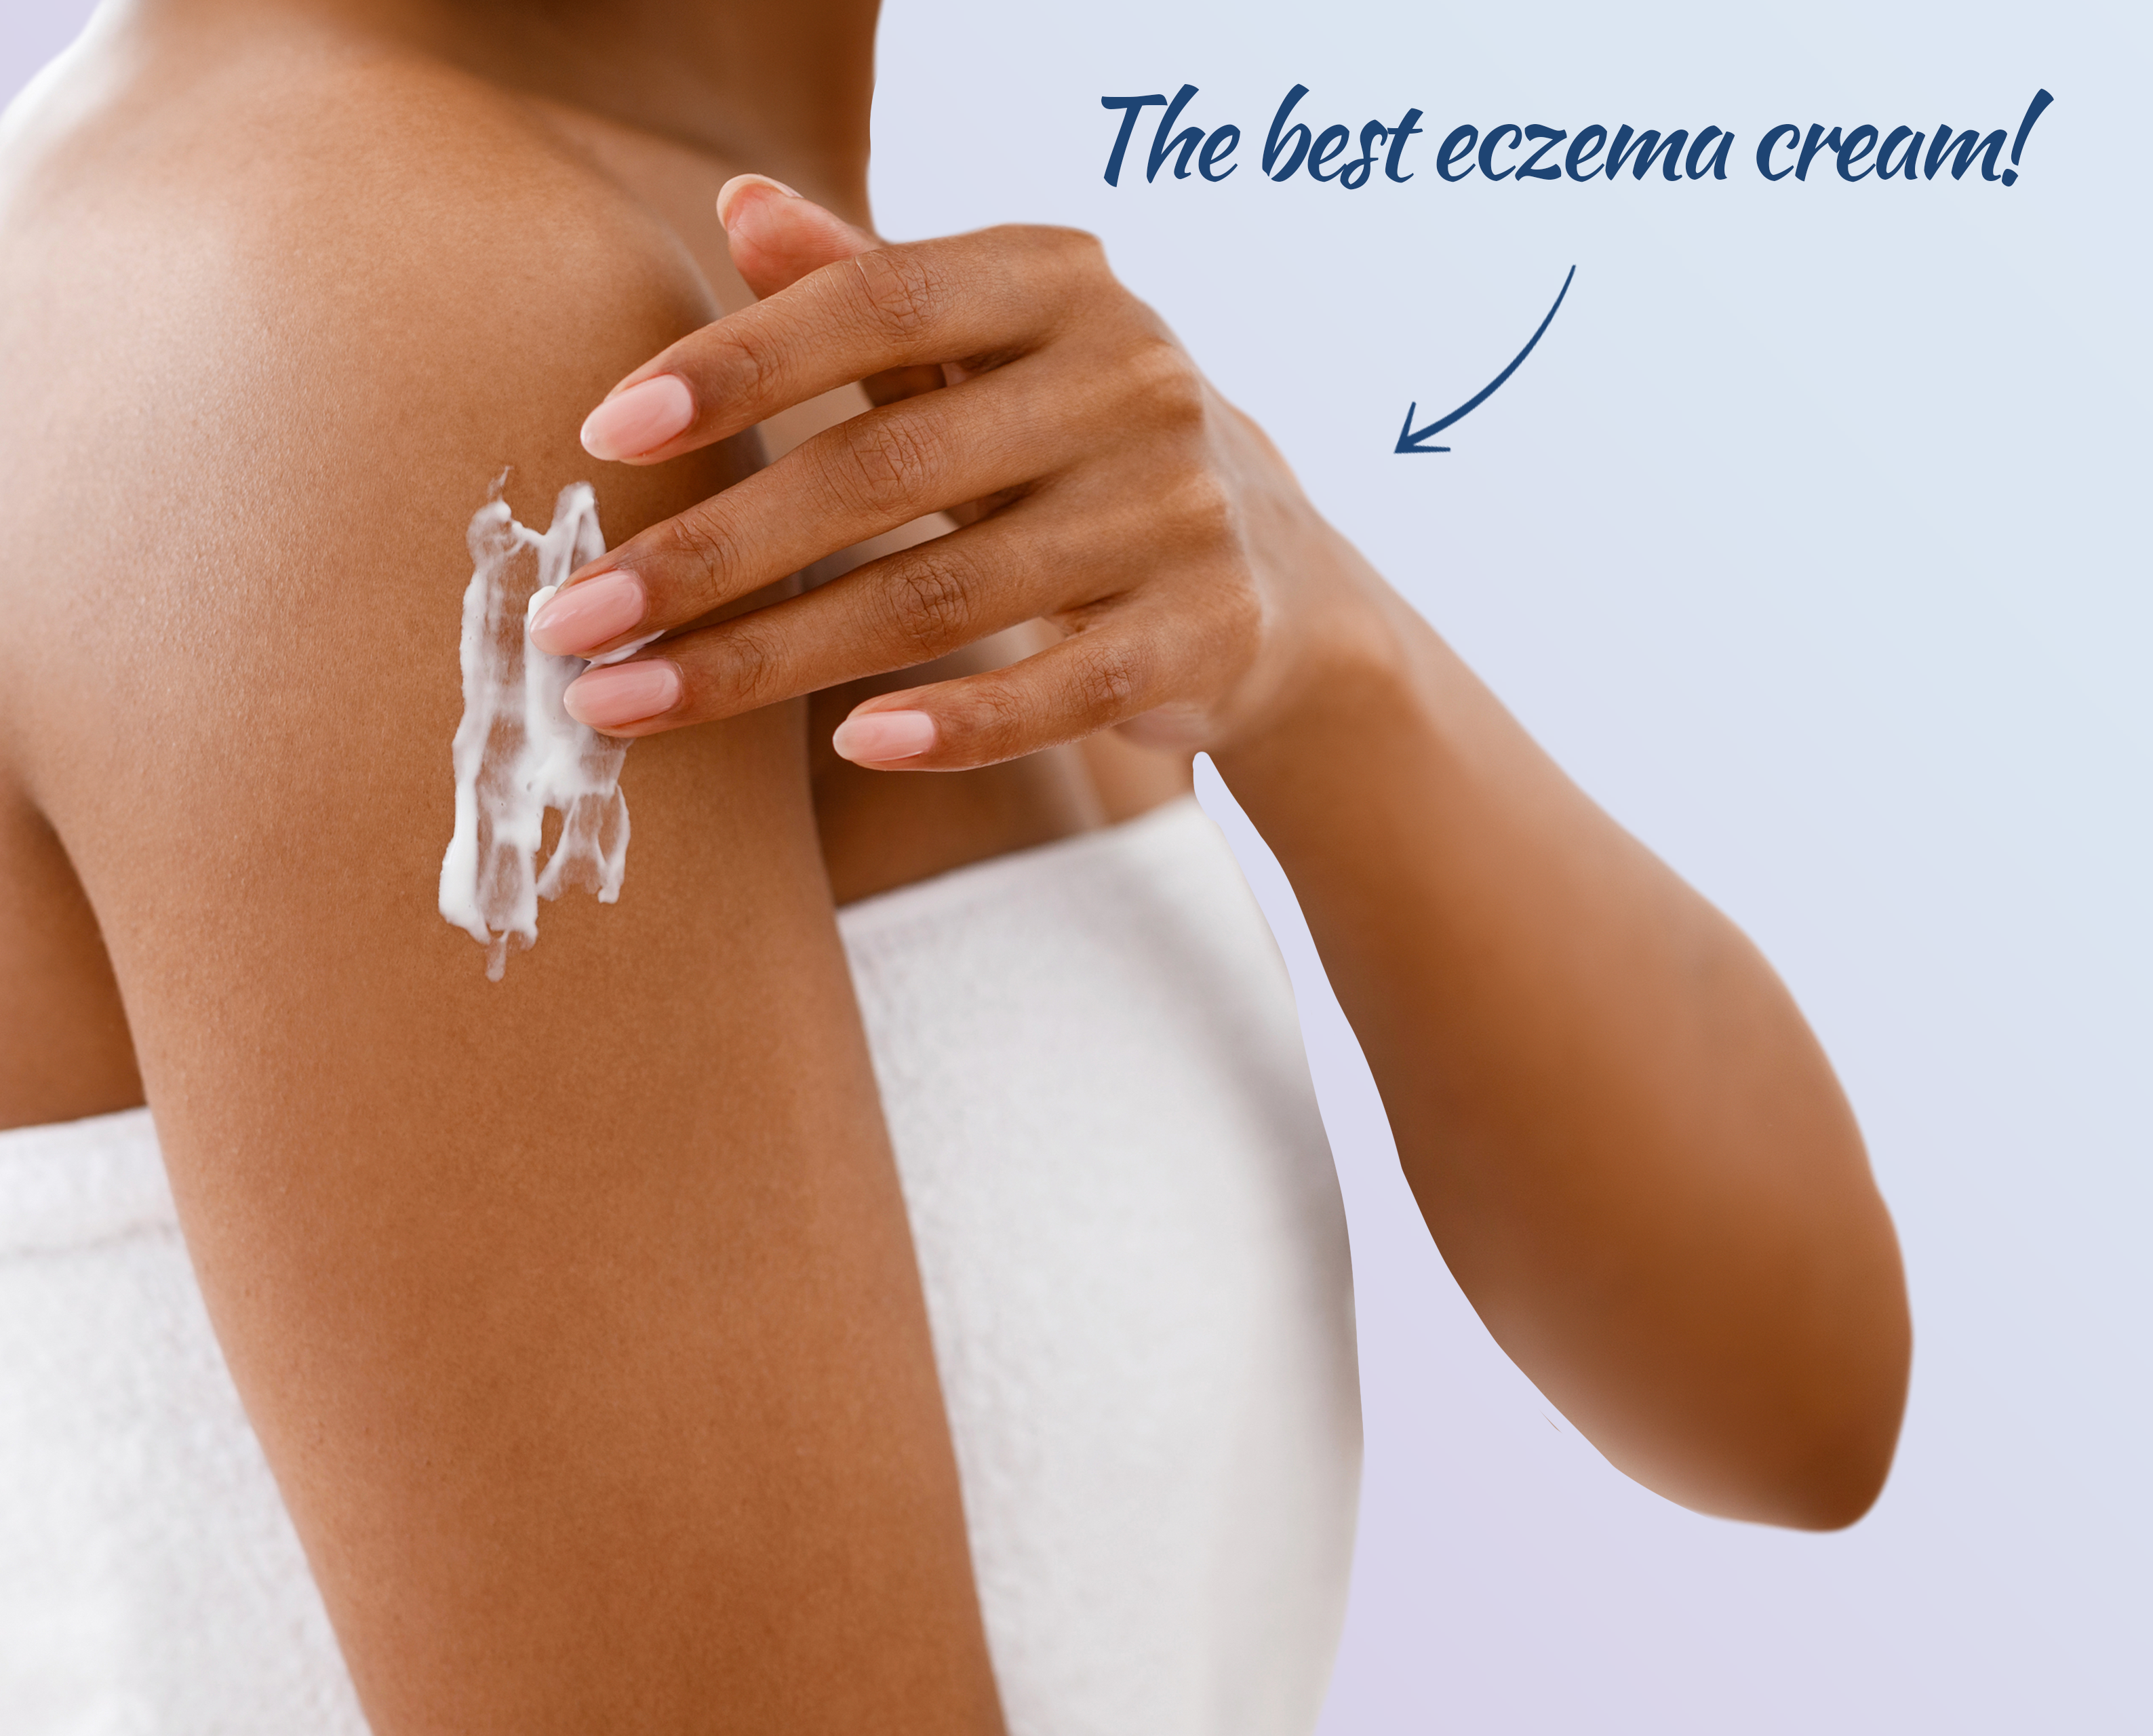 a woman applying an eczema cream on her shoulder